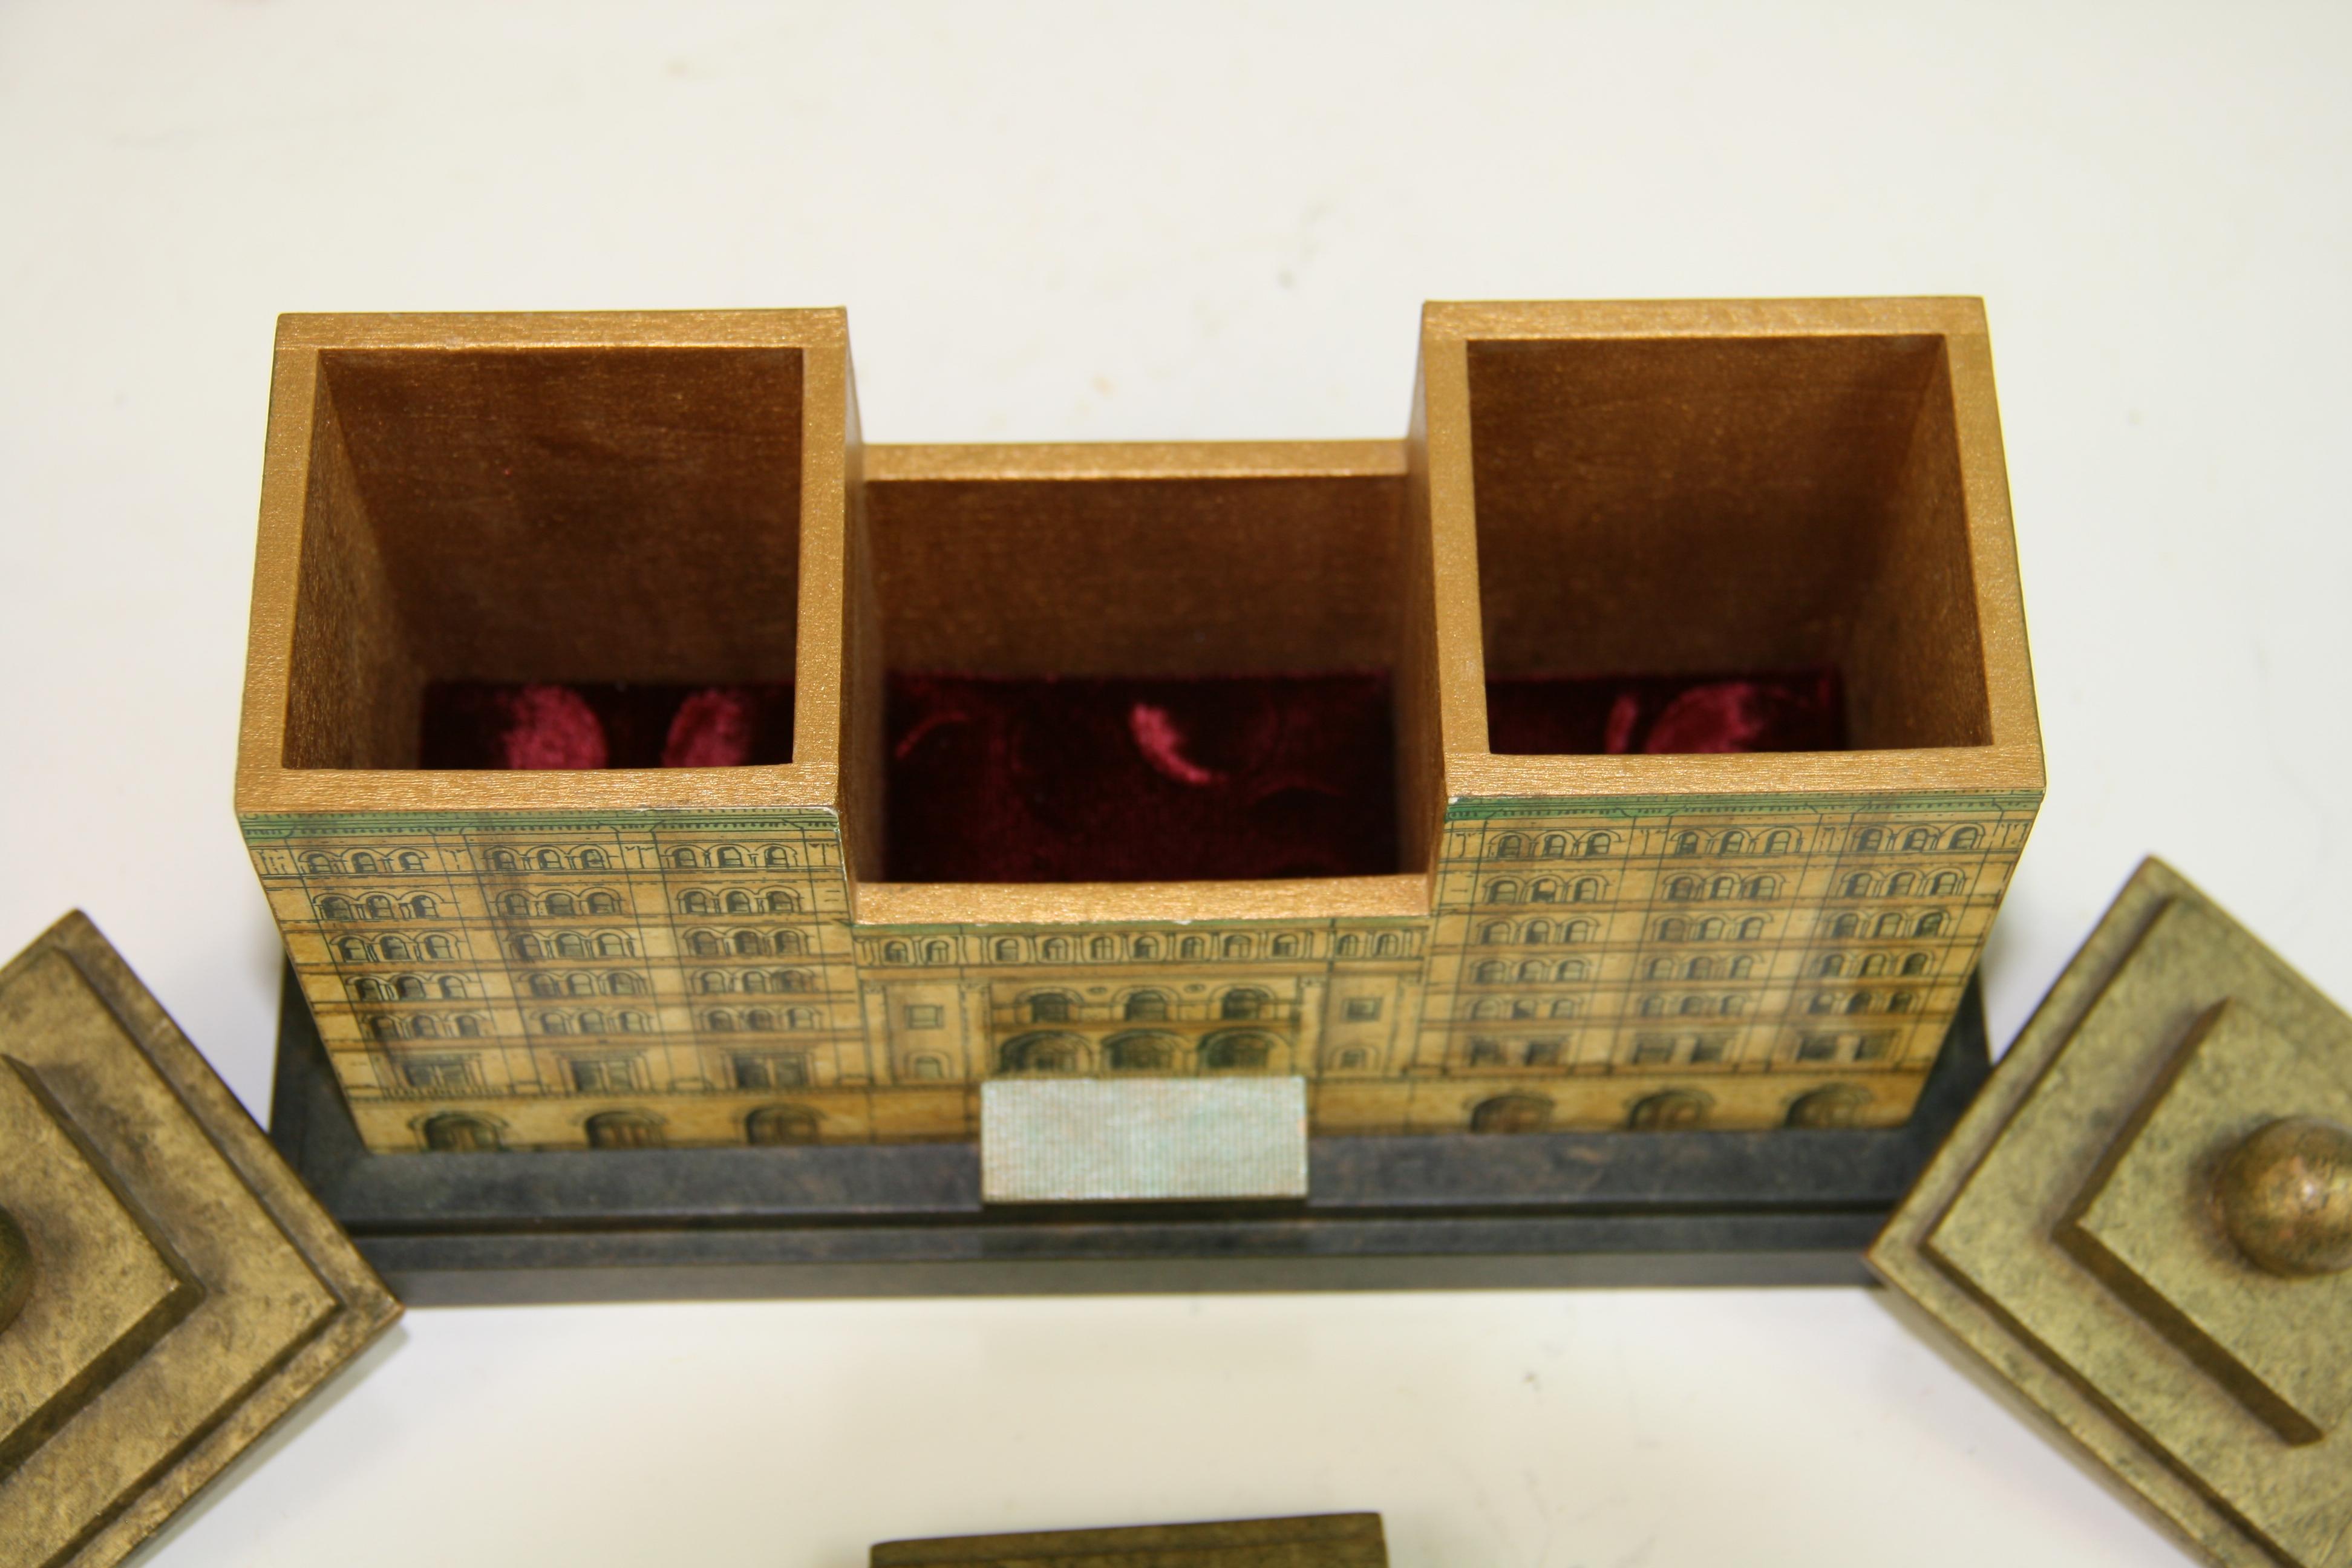 Composition Replica of Old NY Metropolitan Opera House Trinket Box/Model